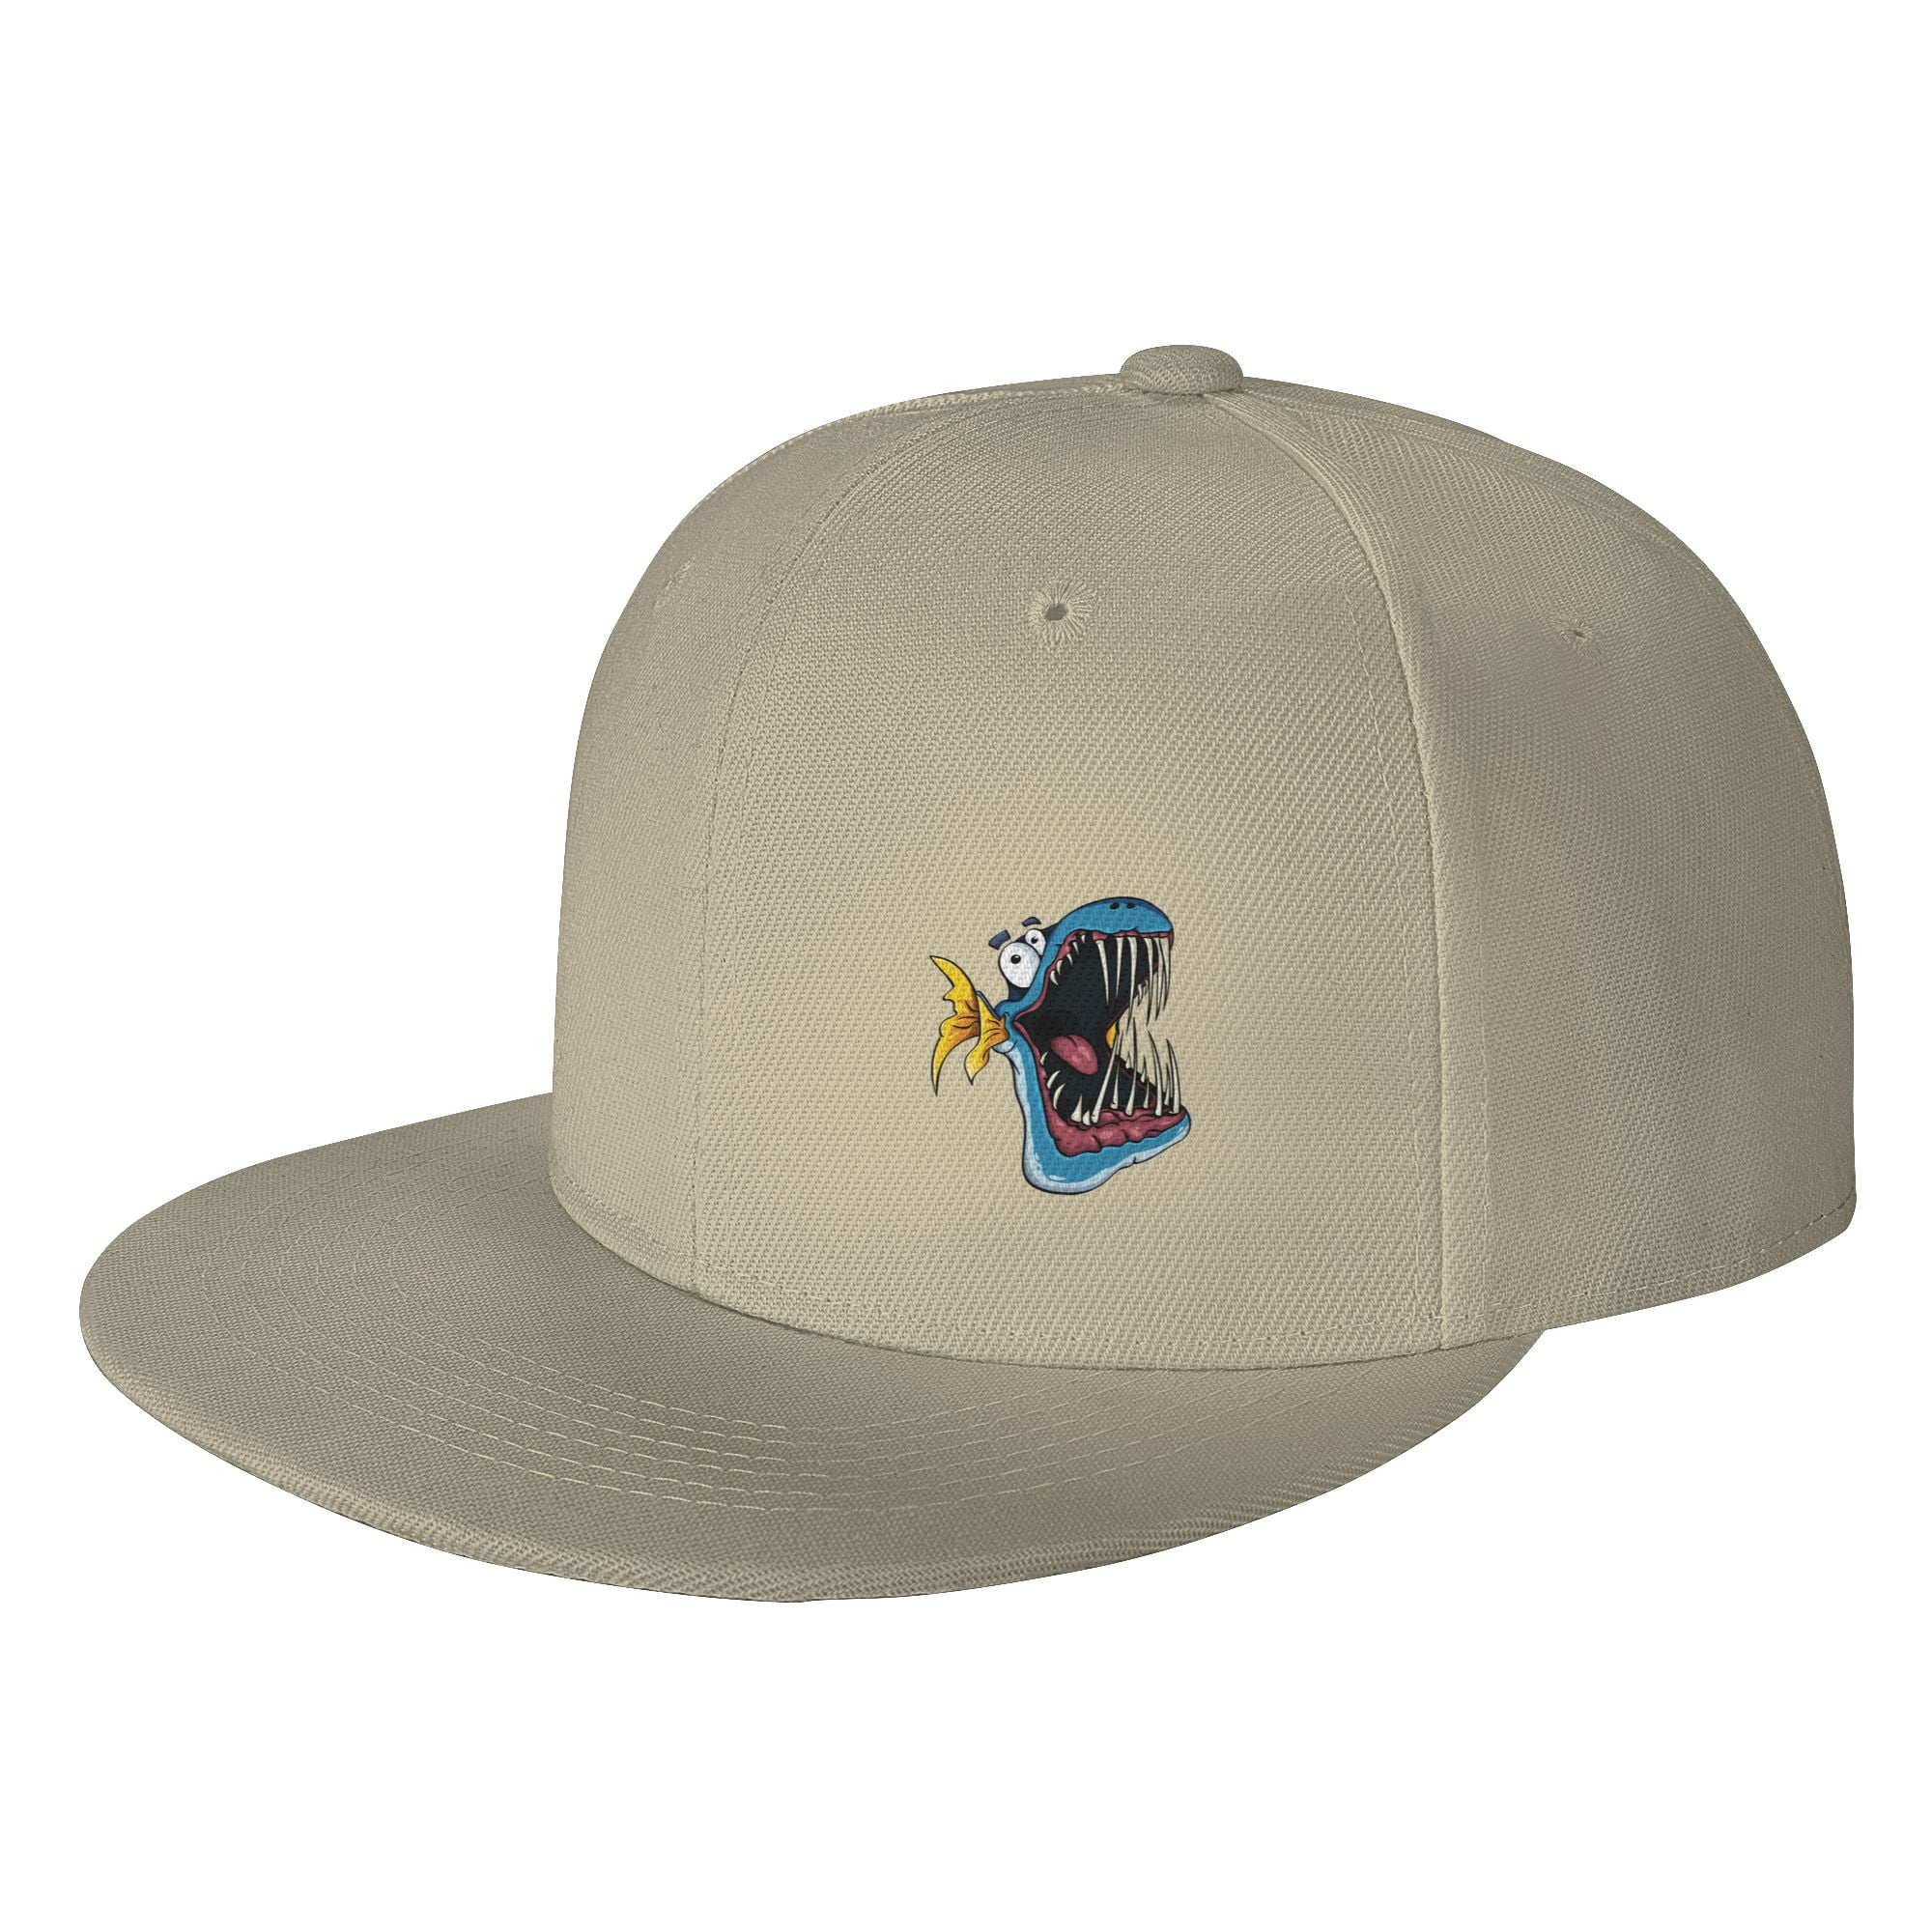 DouZhe Flat Brim Cap Snapback Hat, Funny Fish Toothy Jaw Prints